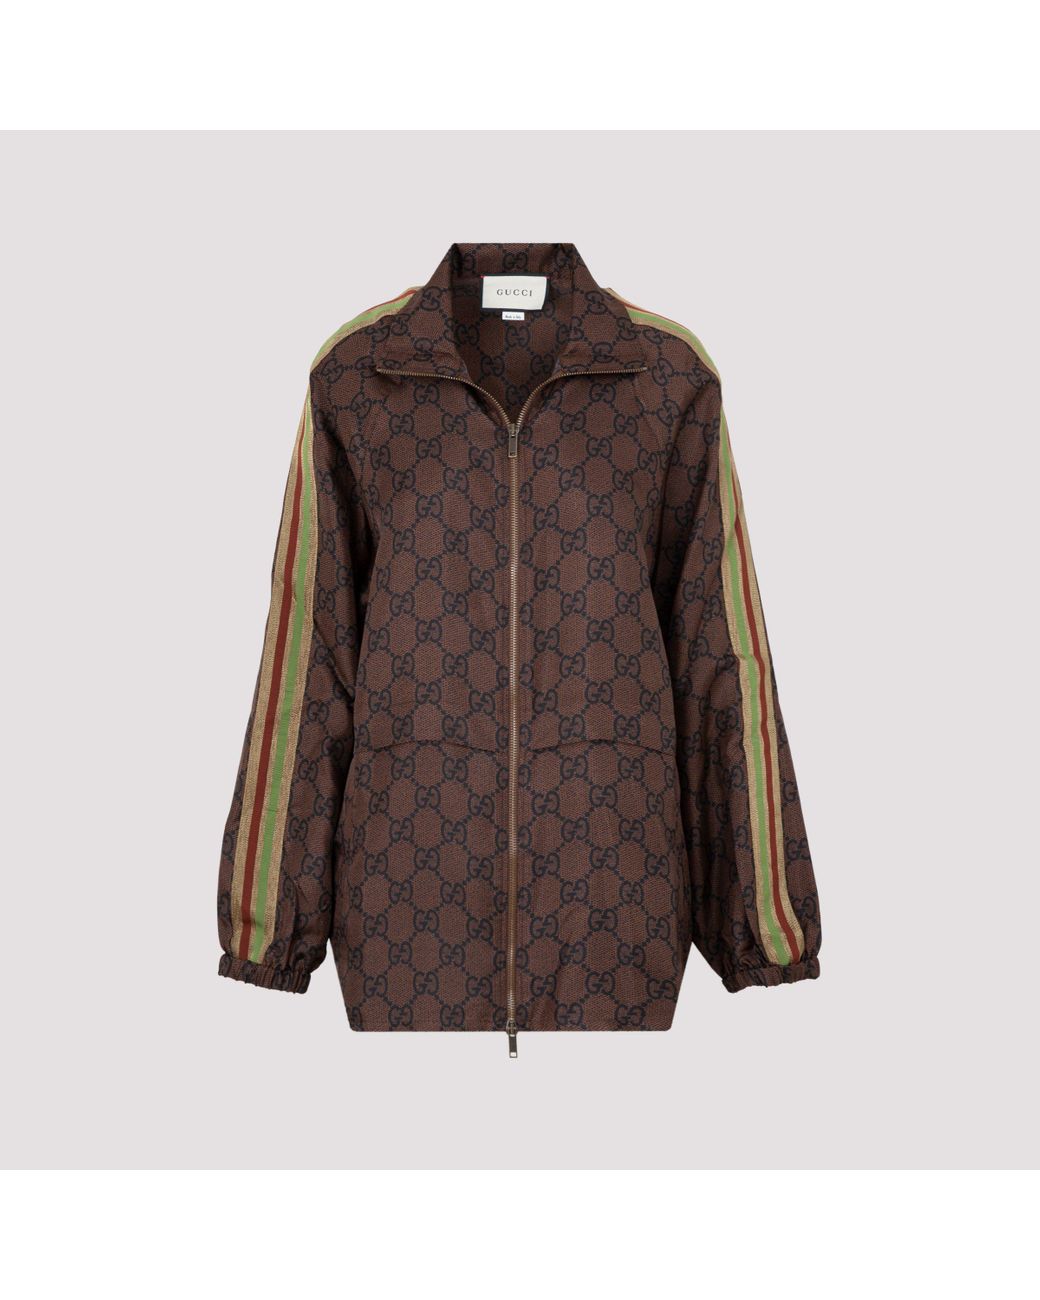 Gucci Silk GG Supreme Print Zip-up Jacket in Brown - Lyst